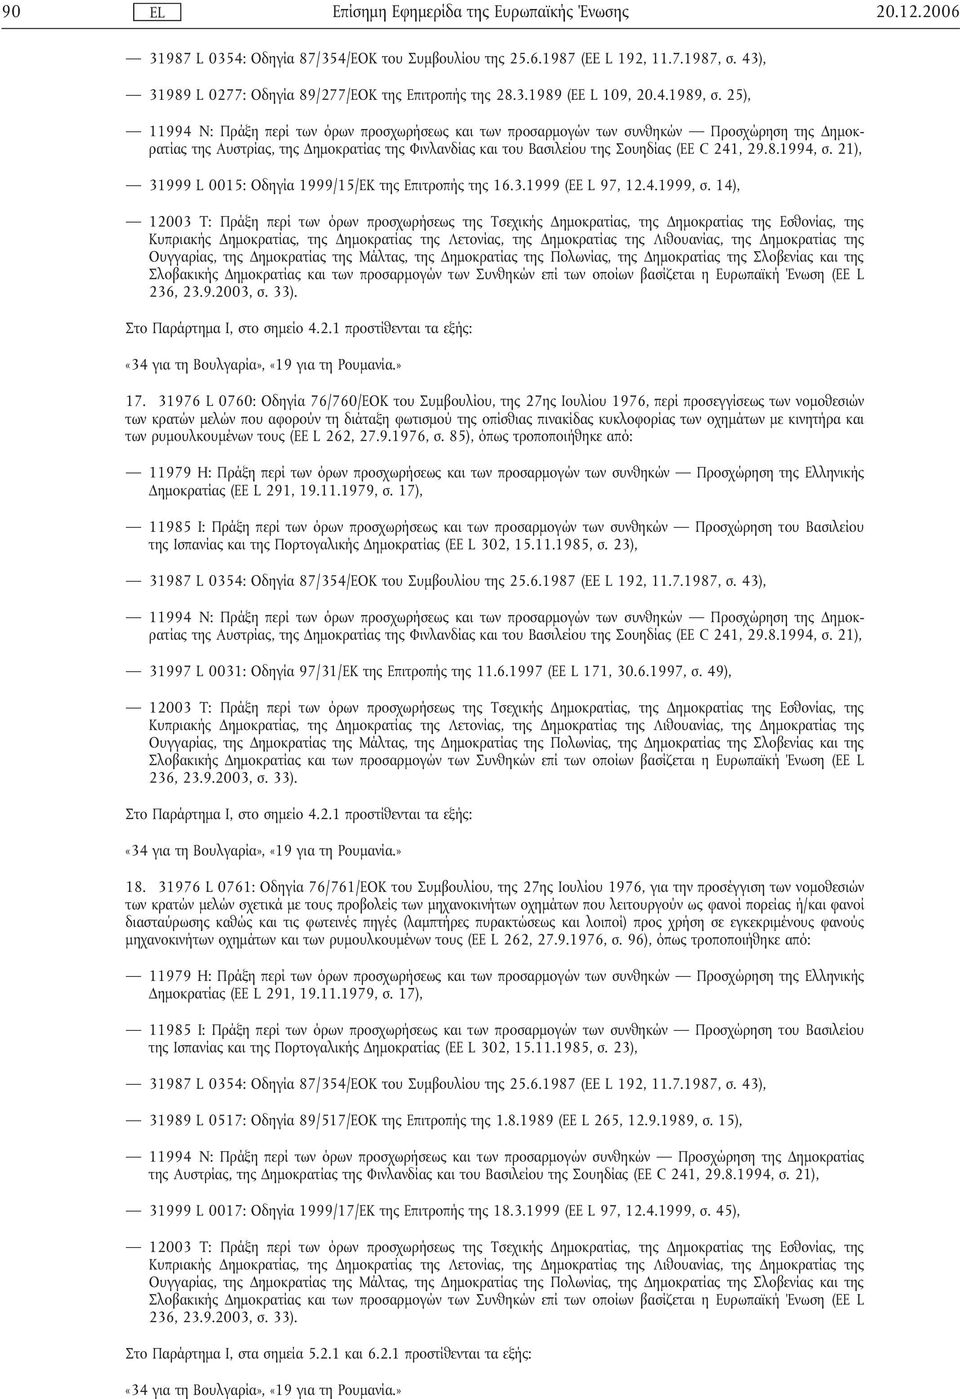 31976 L 0760: Οδηγία 76/760/ΕΟΚ του Συµβουλίου, της 27ης Ιουλίου 1976, περί προσεγγίσεως των νοµοθεσιών των κρατών µελών που αφορούν τη διάταξη φωτισµού της οπίσθιας πινακίδας κυκλοφορίας των